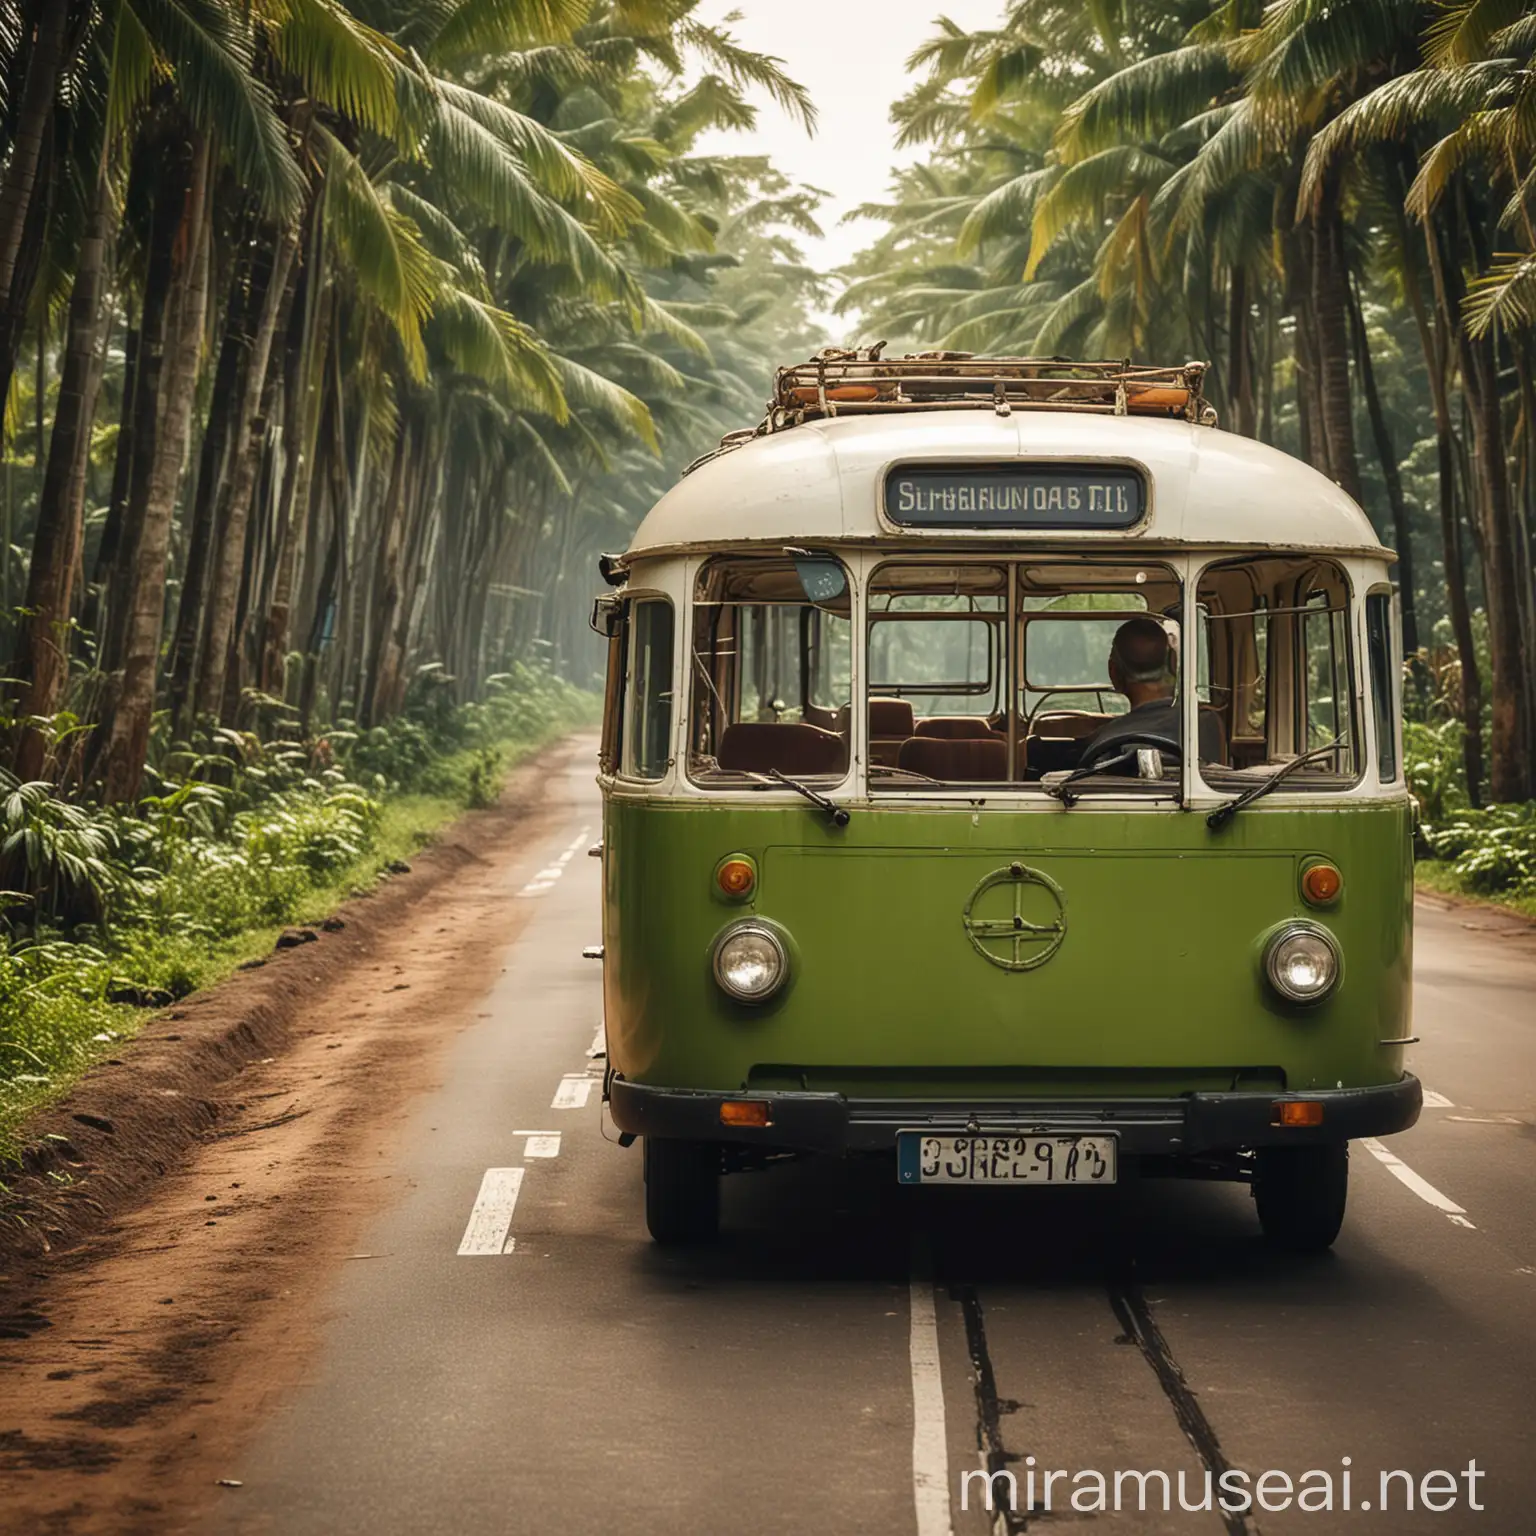 EcoFriendly Travel Sustainable Transportation Options